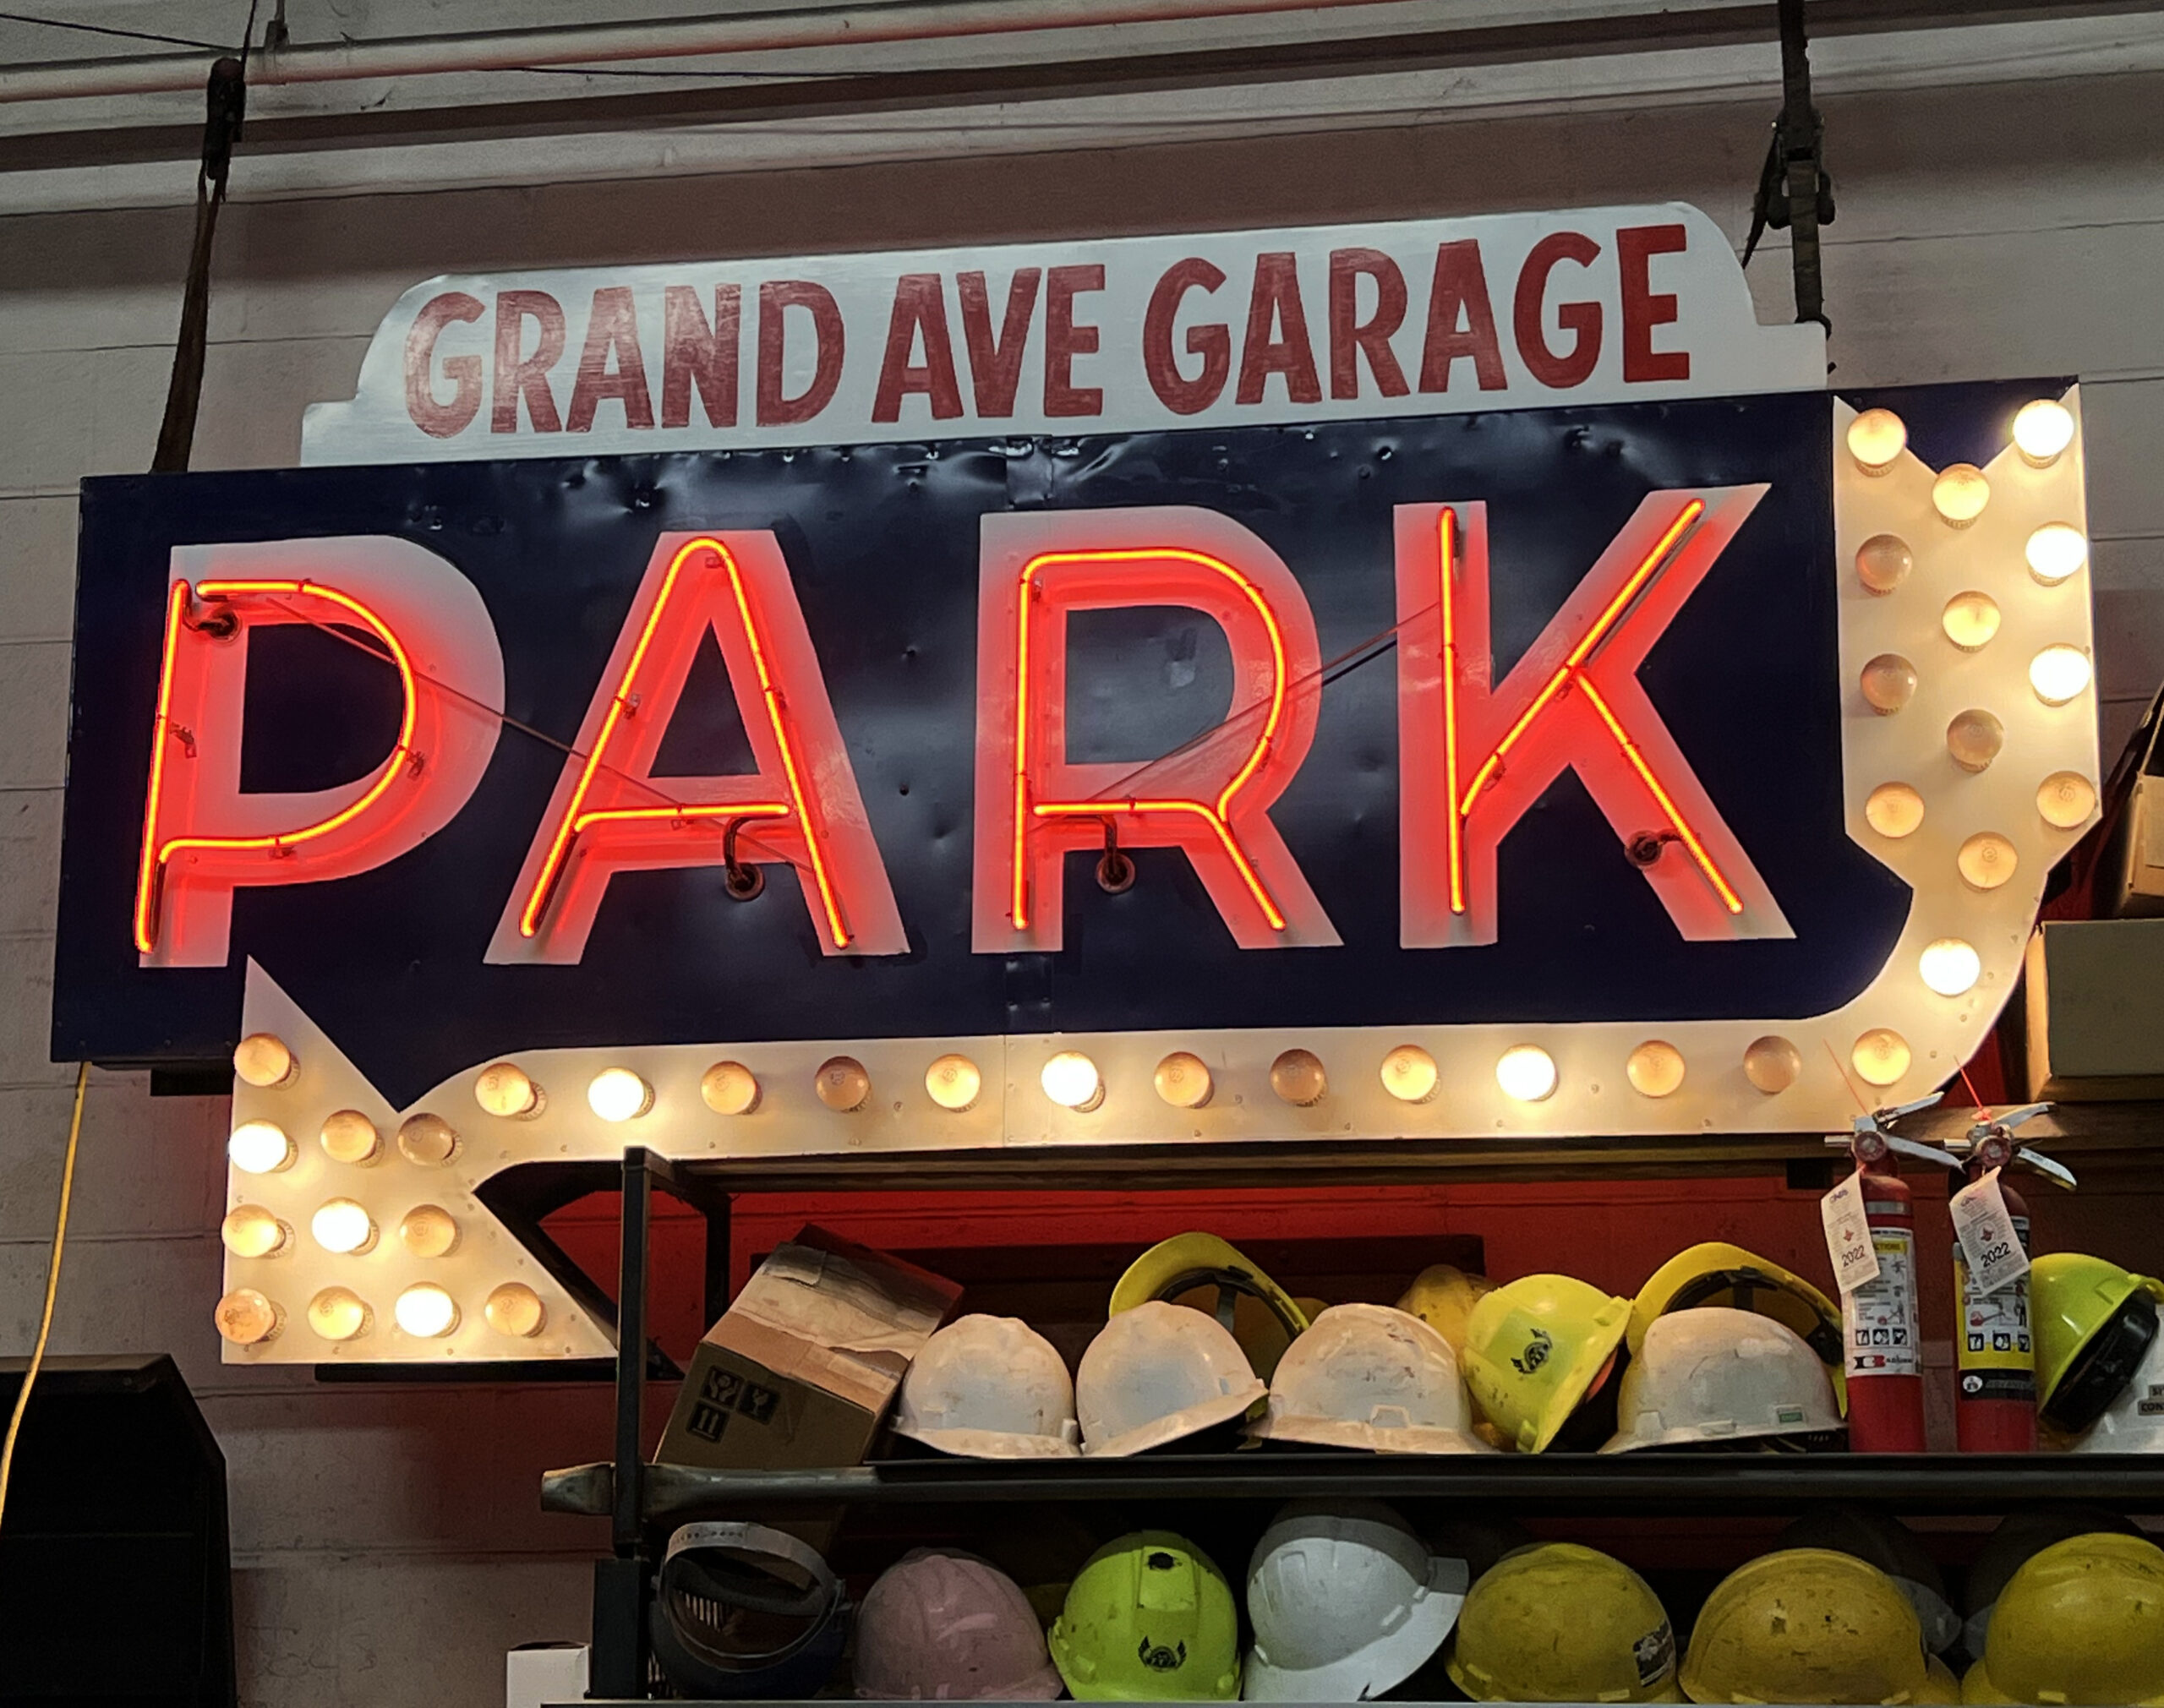 Grand Avenue Garage PARK HERO